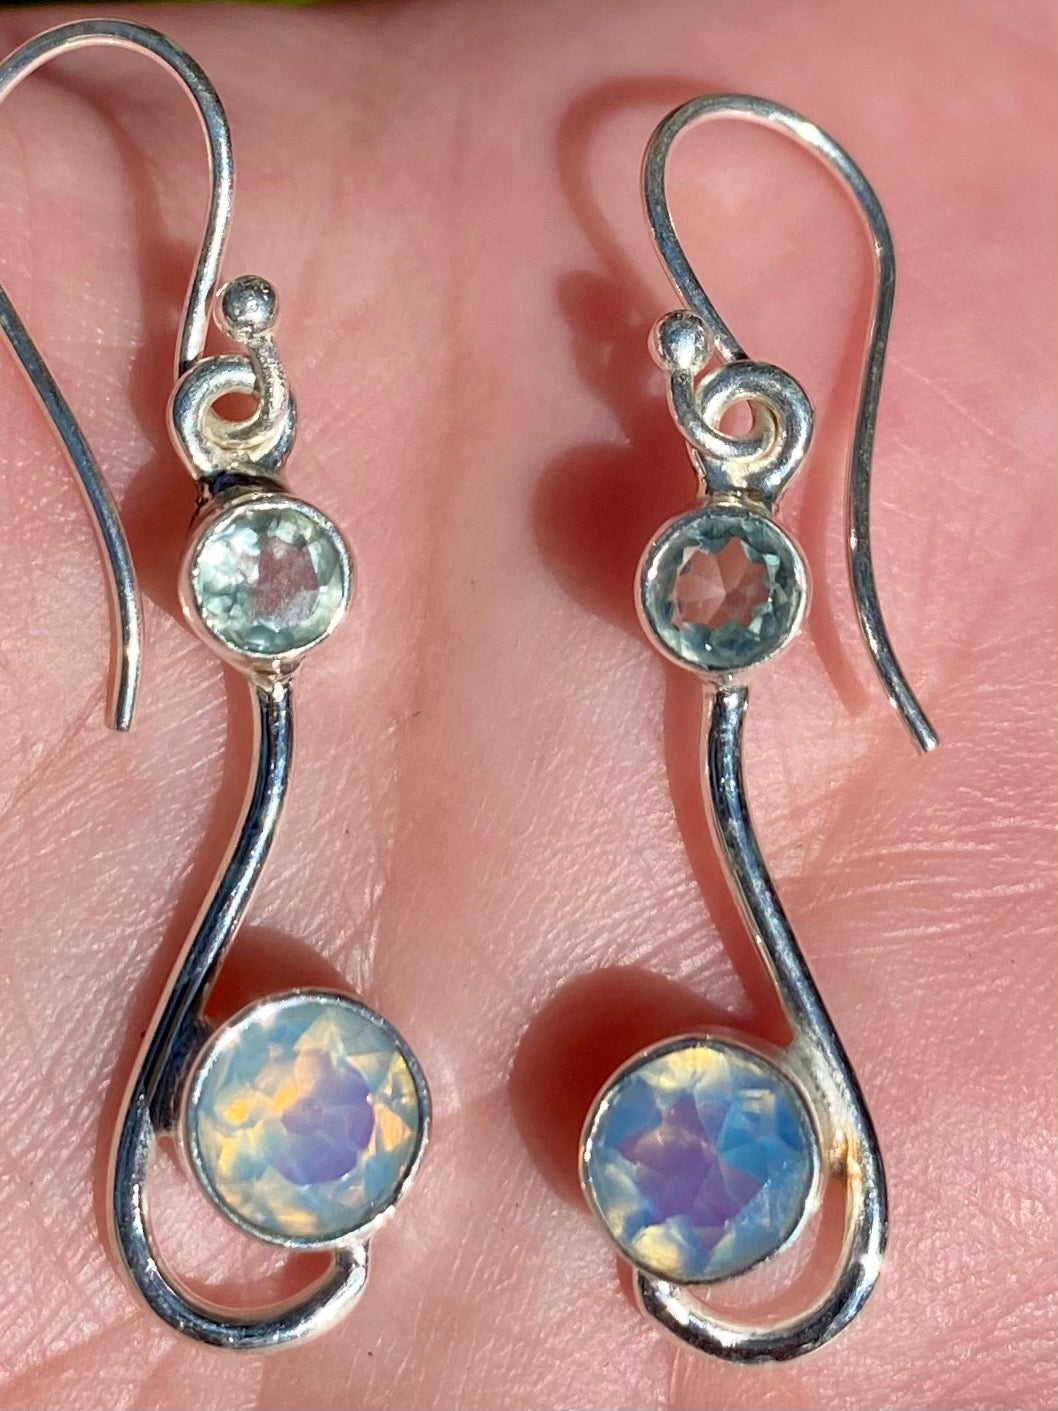 Fire Opalite and Blue Apatite Earrings - Morganna’s Treasures 